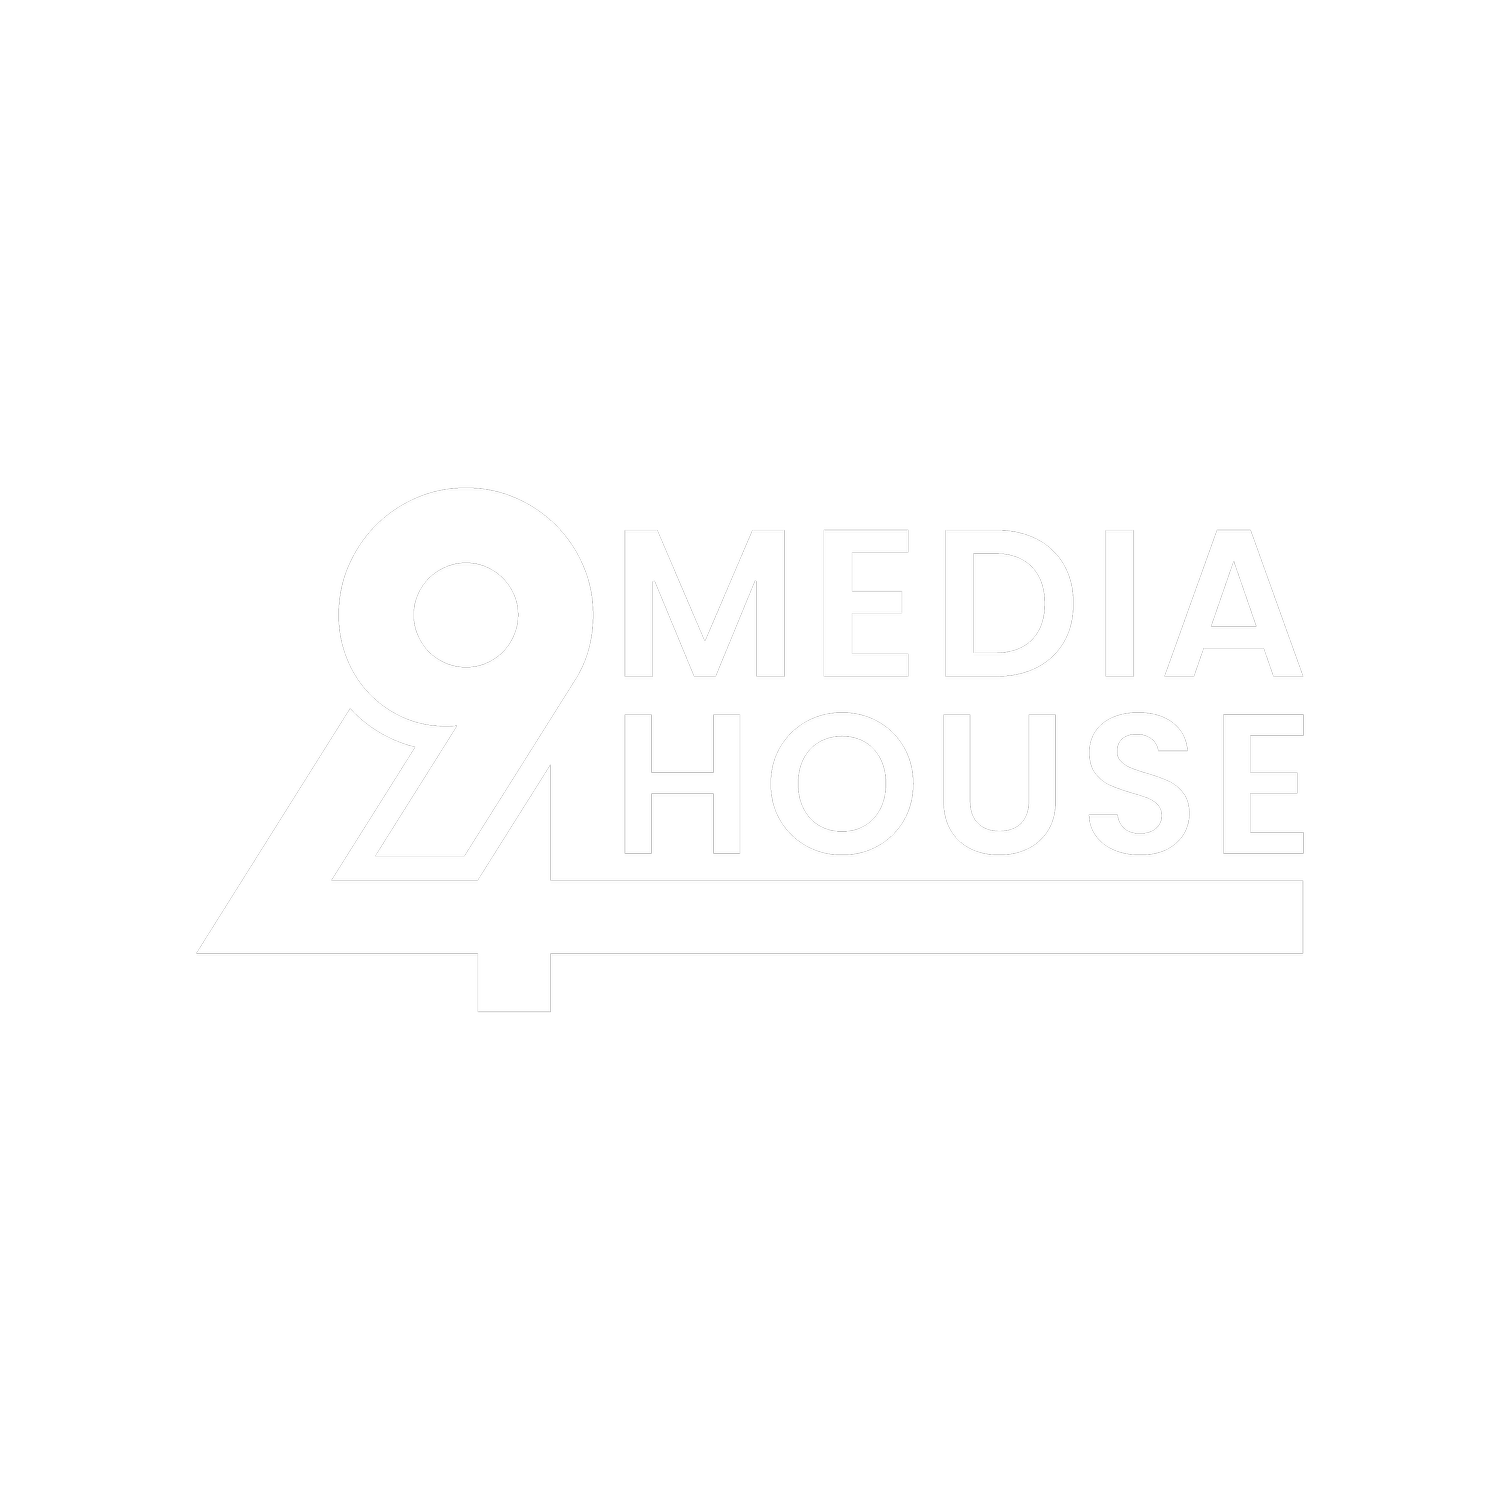 94 Media House